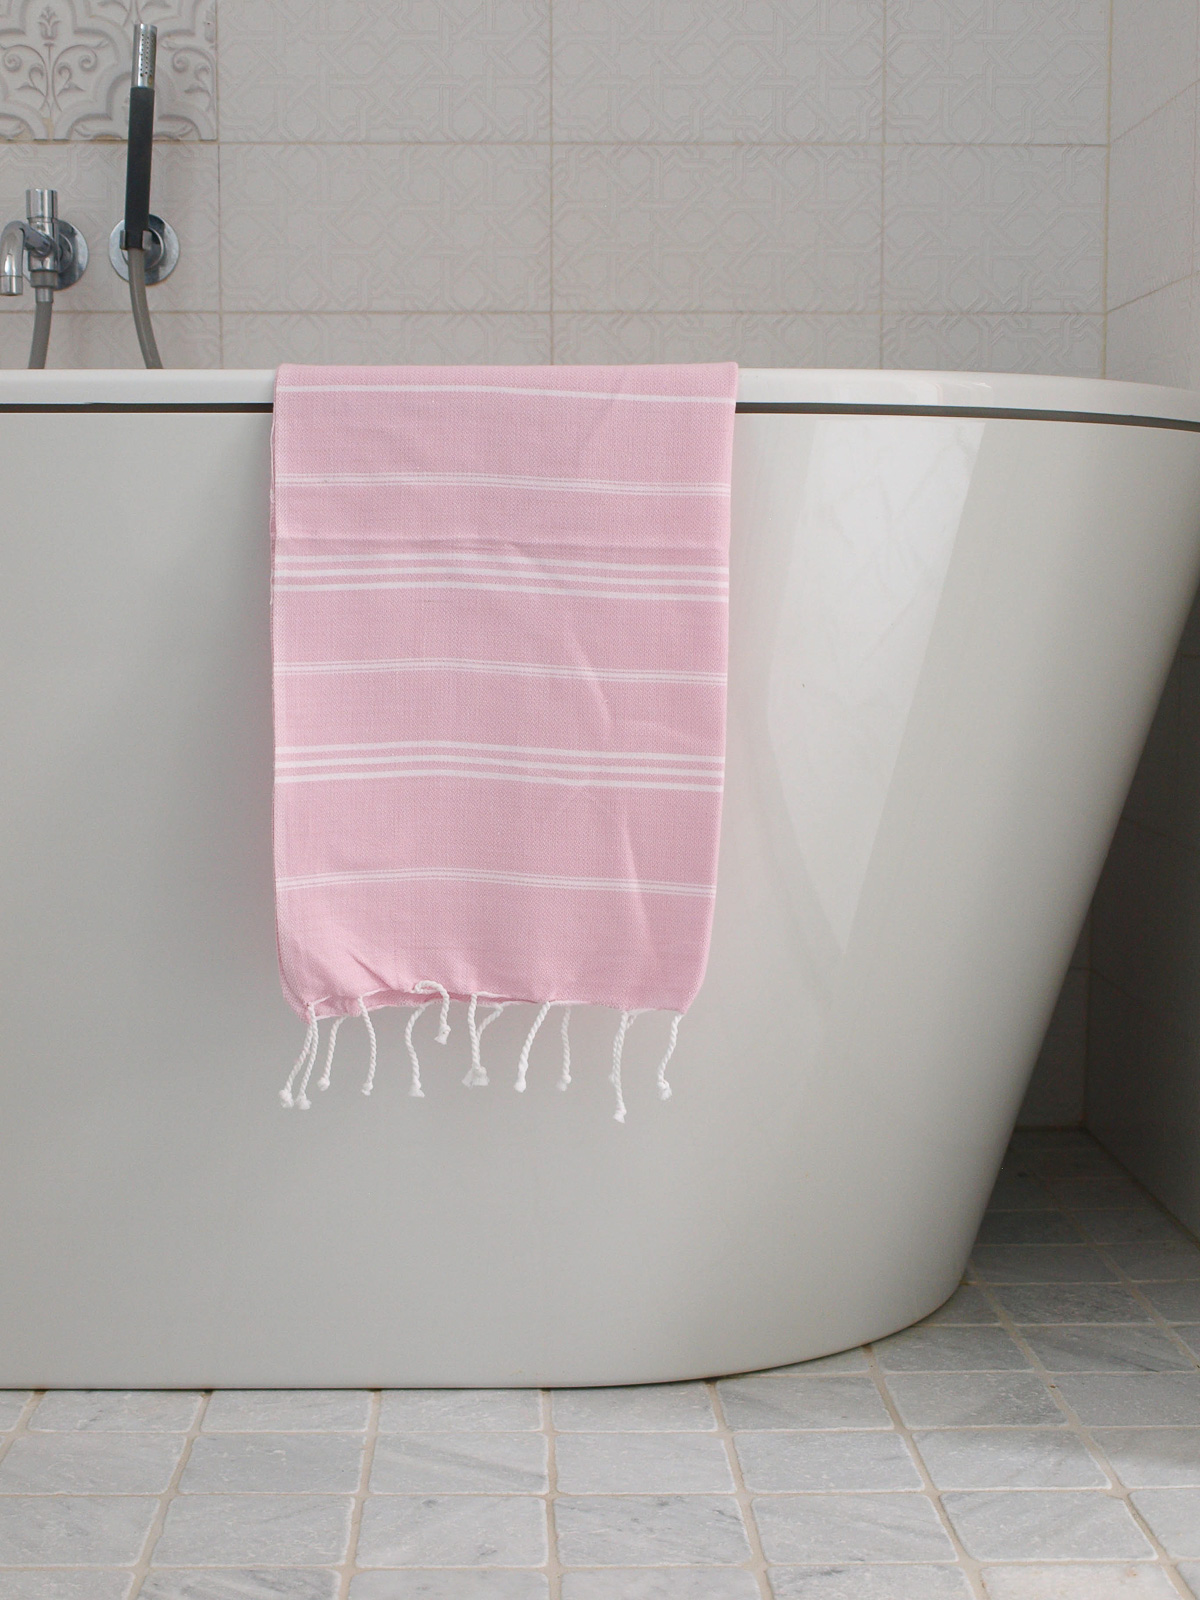 hammam towel pink/white